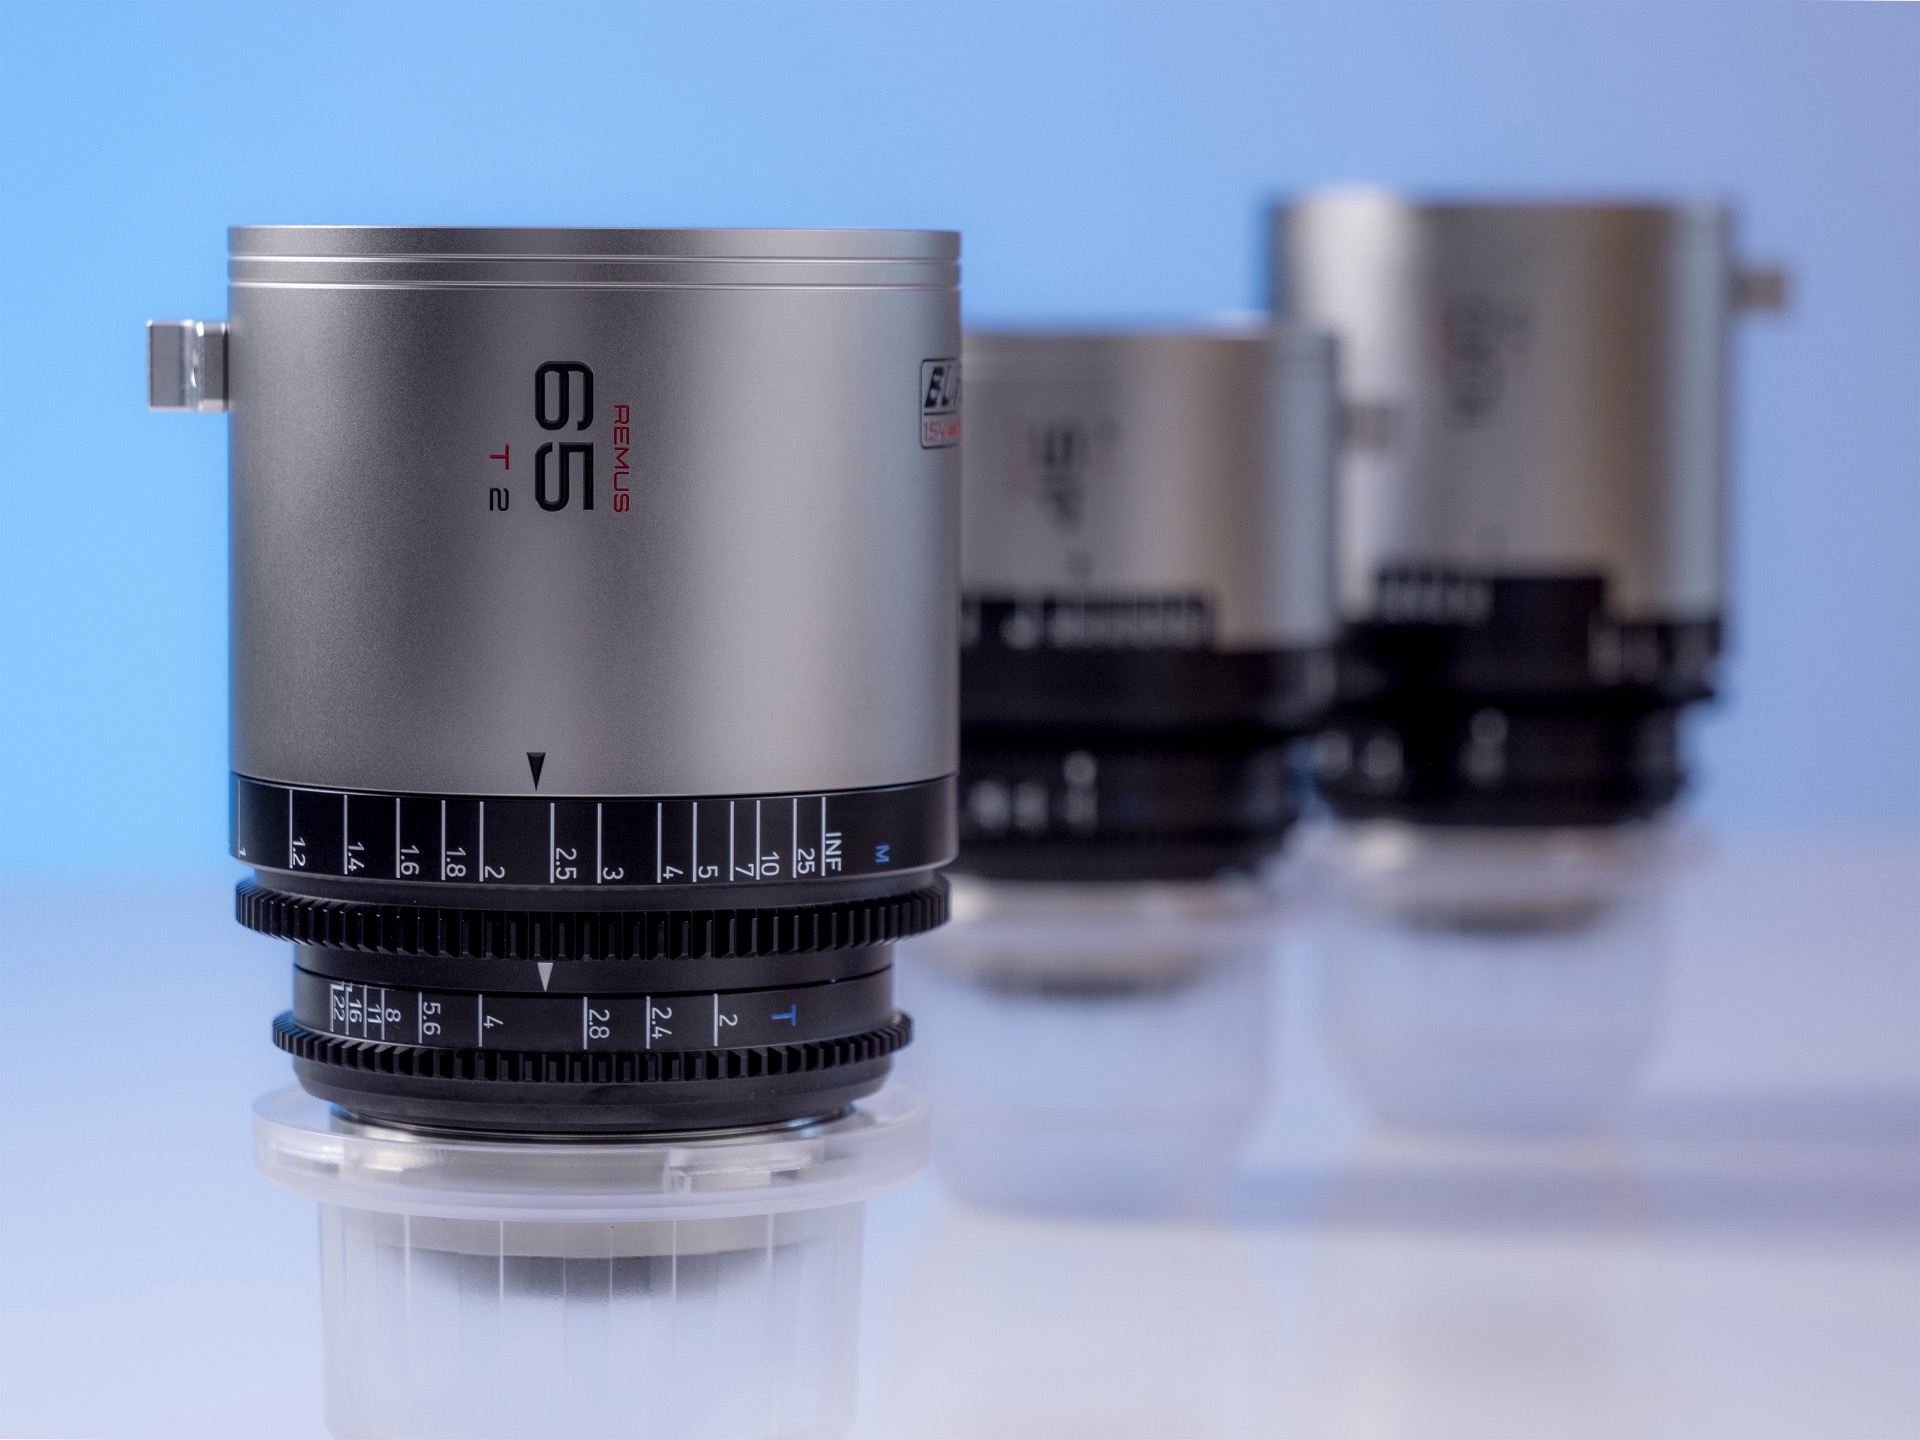 Review: Blazar Remus 1.5x anamorphic lenses 24